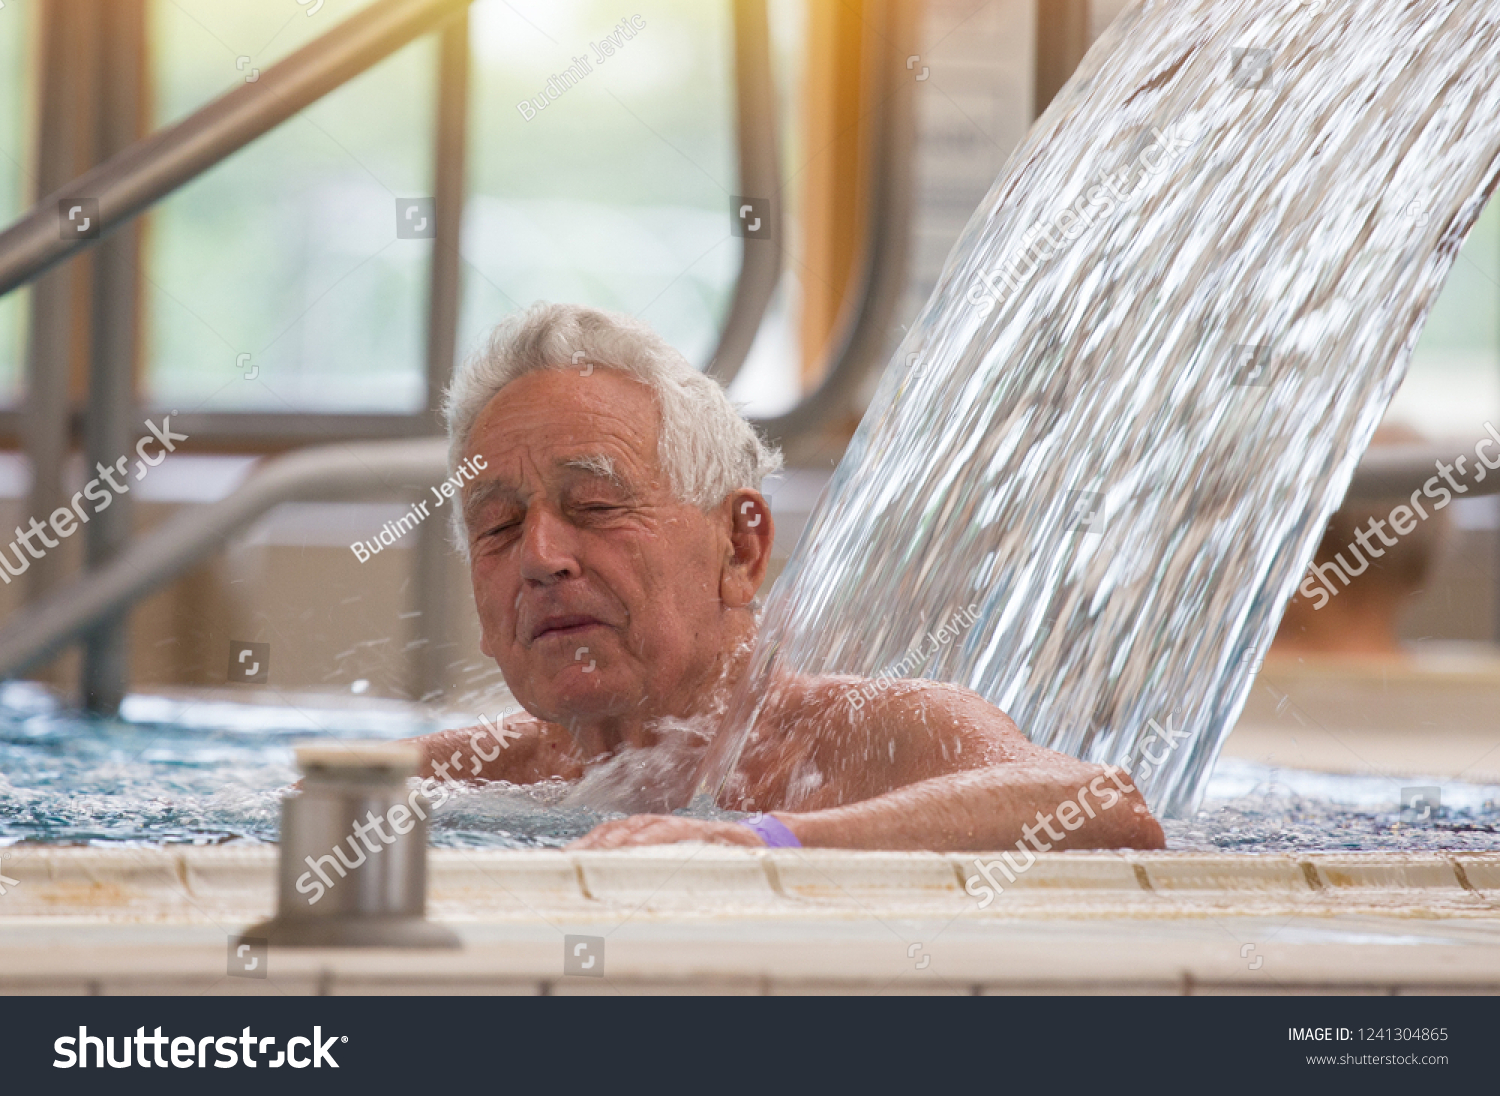 Image result for enjoying warm water bath